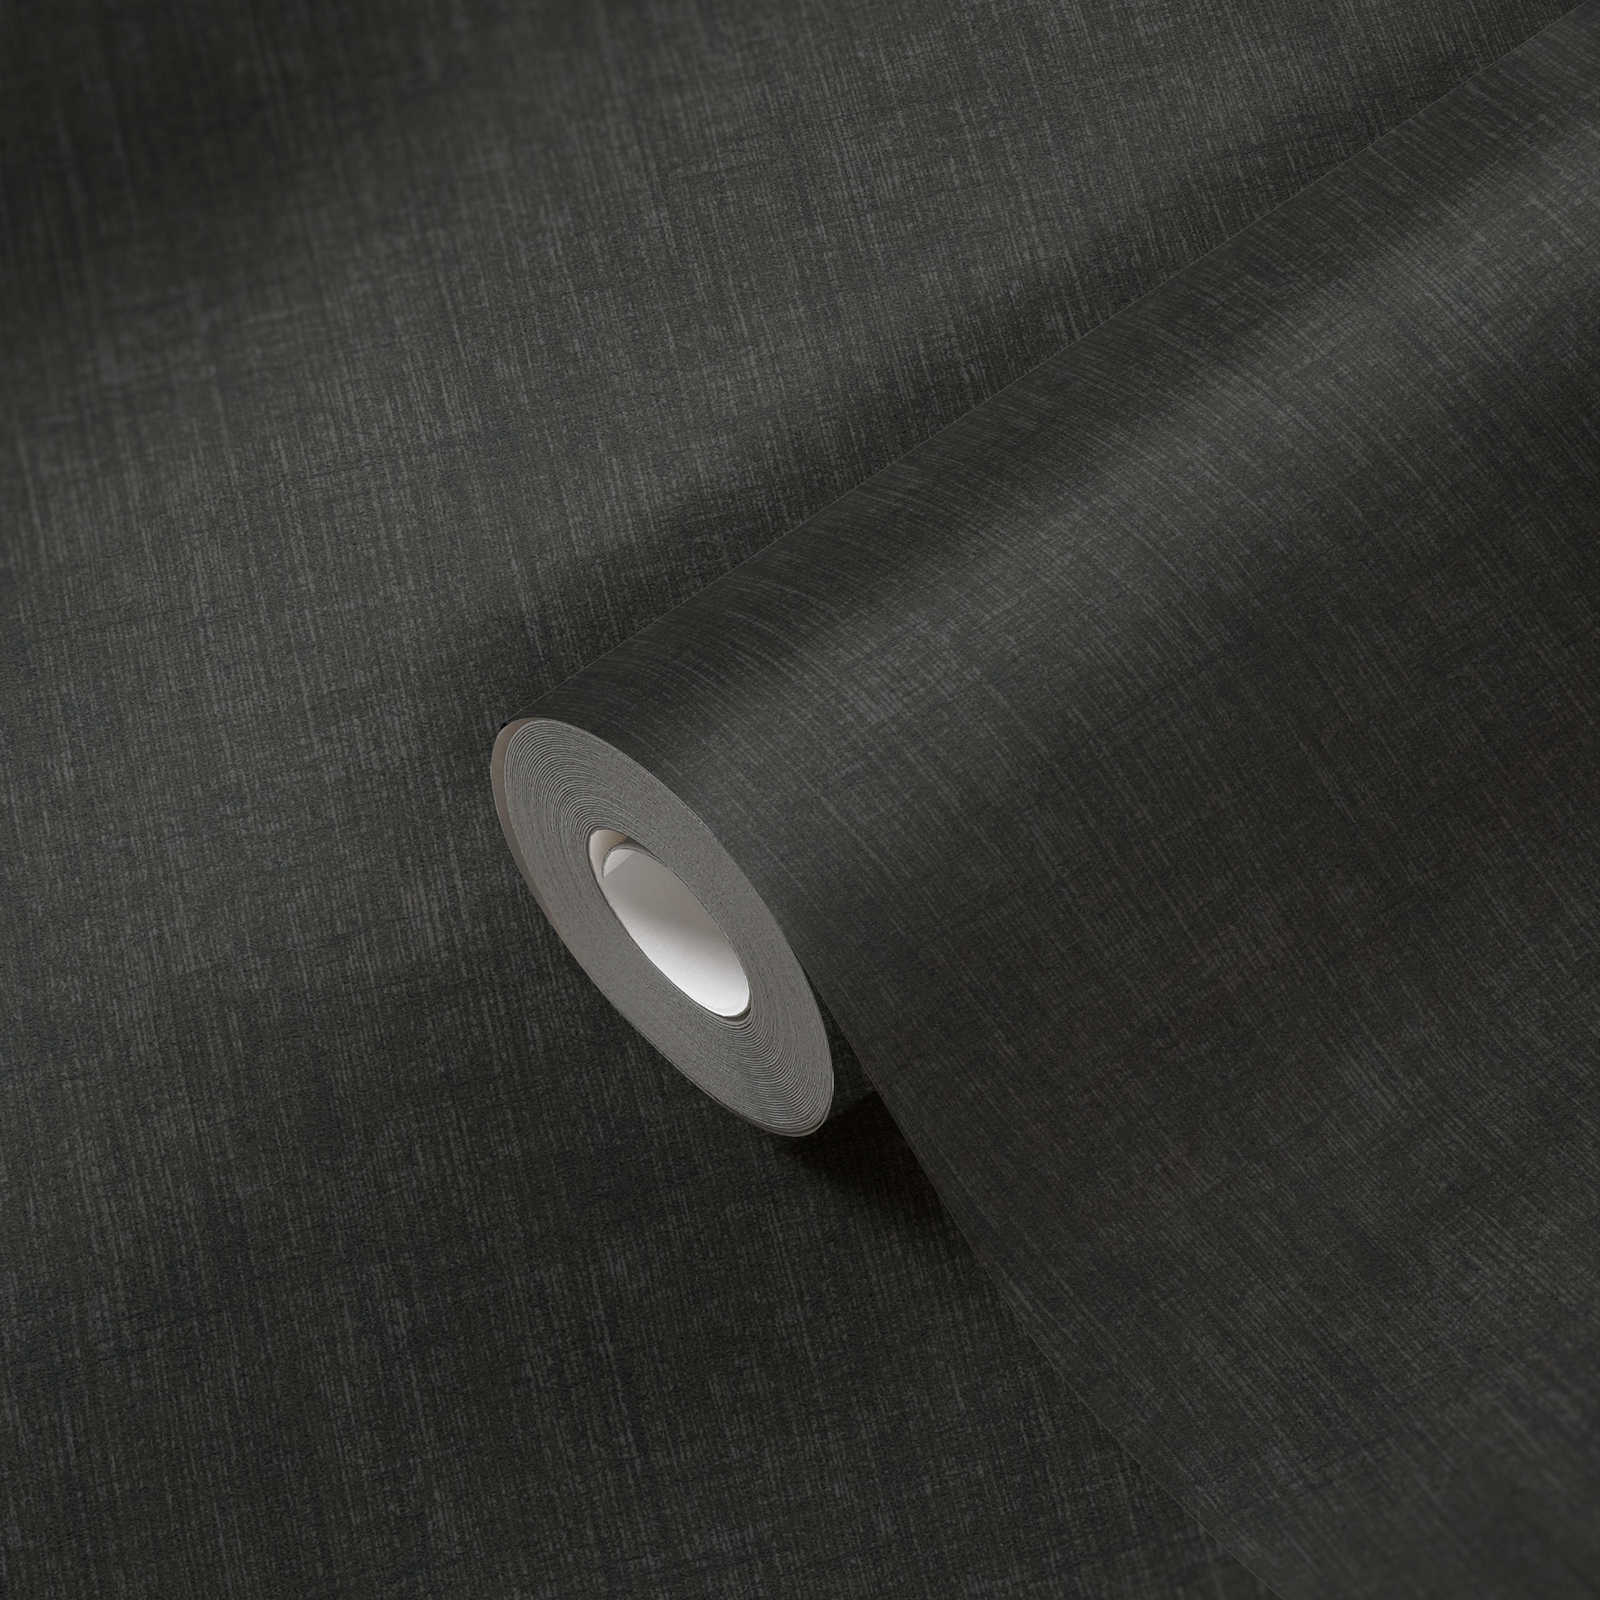             Black non-woven wallpaper with mellow textile pattern
        